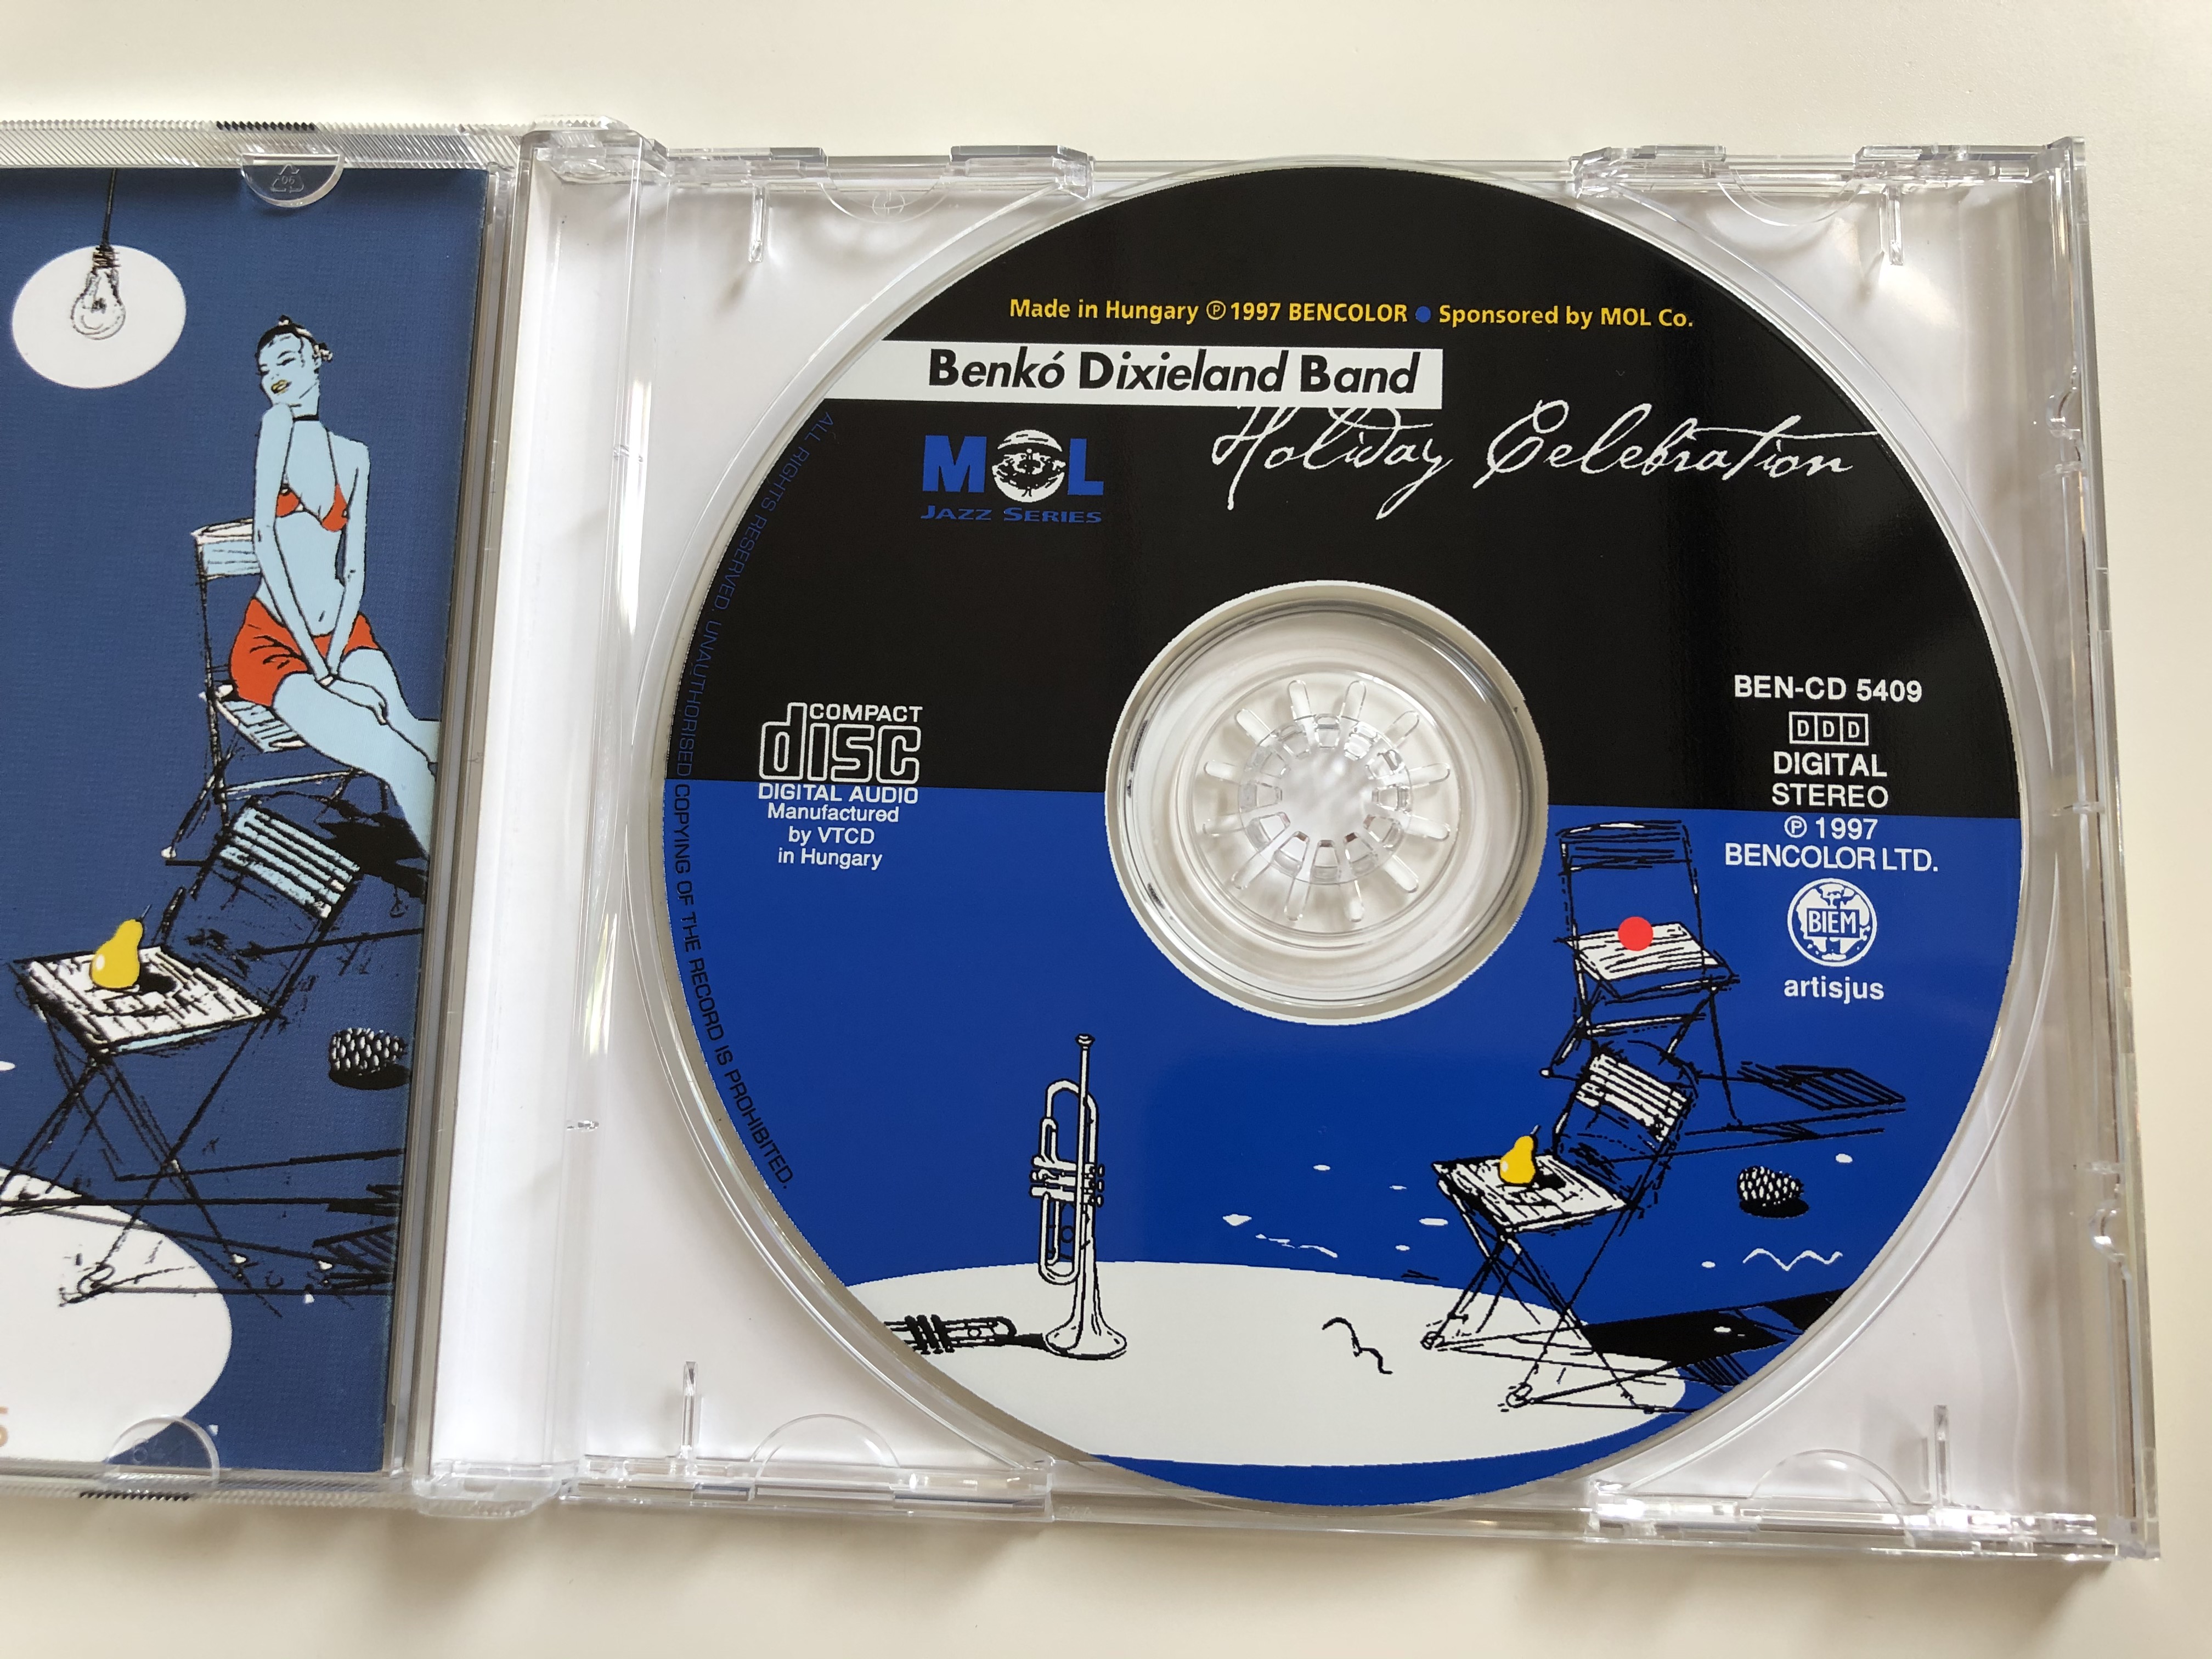 benk-dixieland-band-holiday-celebration-bencolor-audio-cd-1997-stereo-ben-cd-5409-4-.jpg